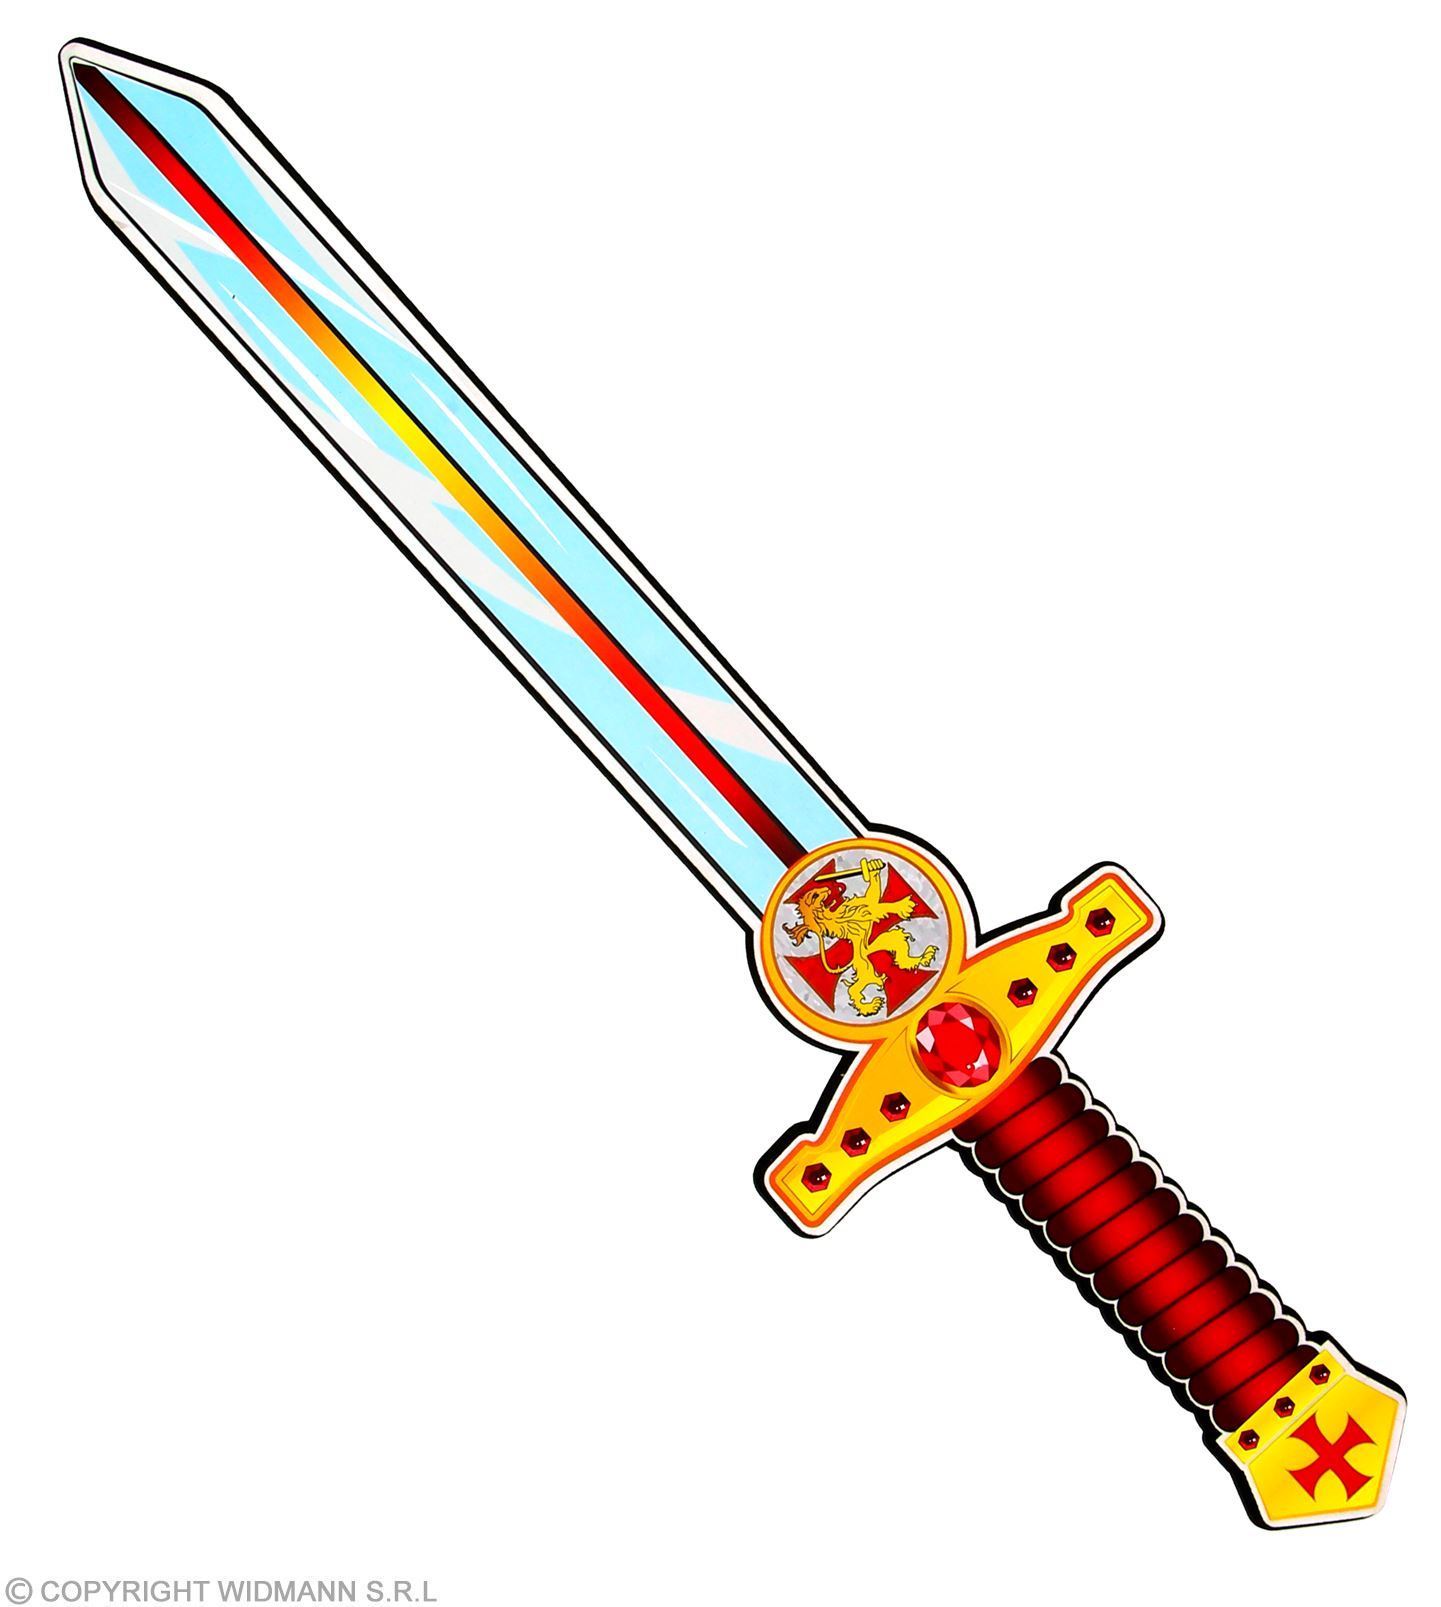 kruisridder zwaard gemaakt van schuim